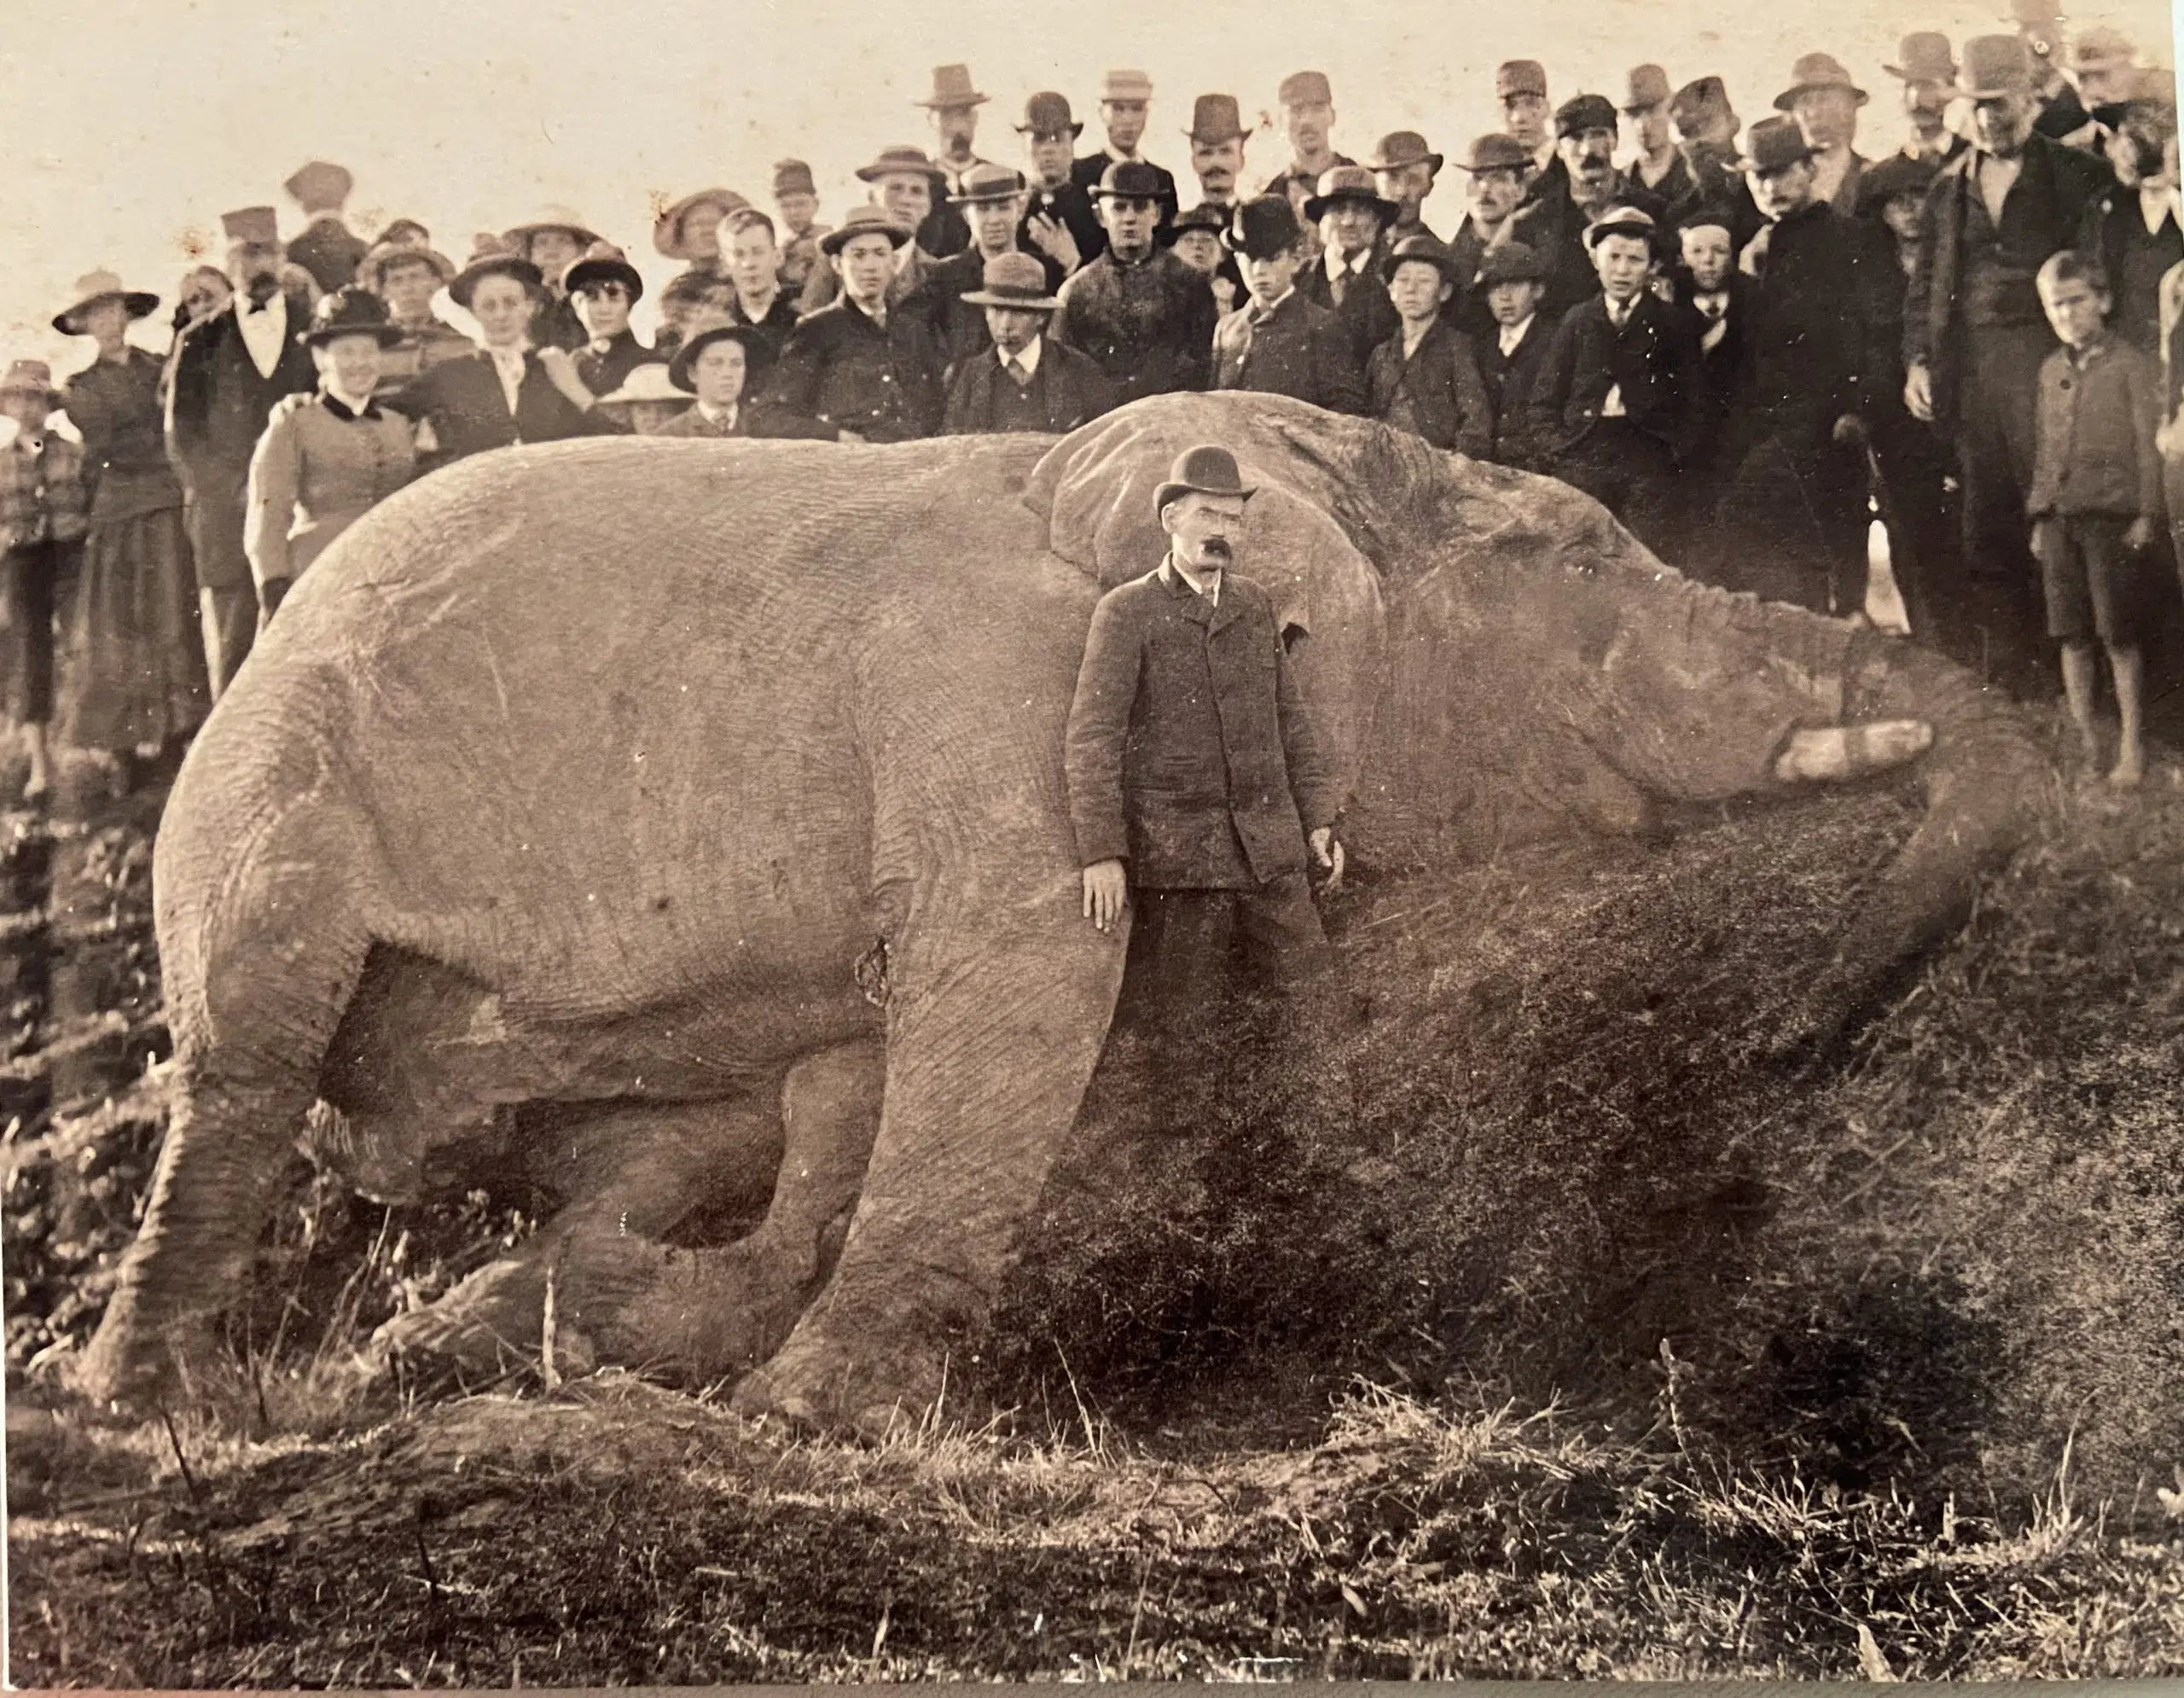 What killed Jumbo the elephant?